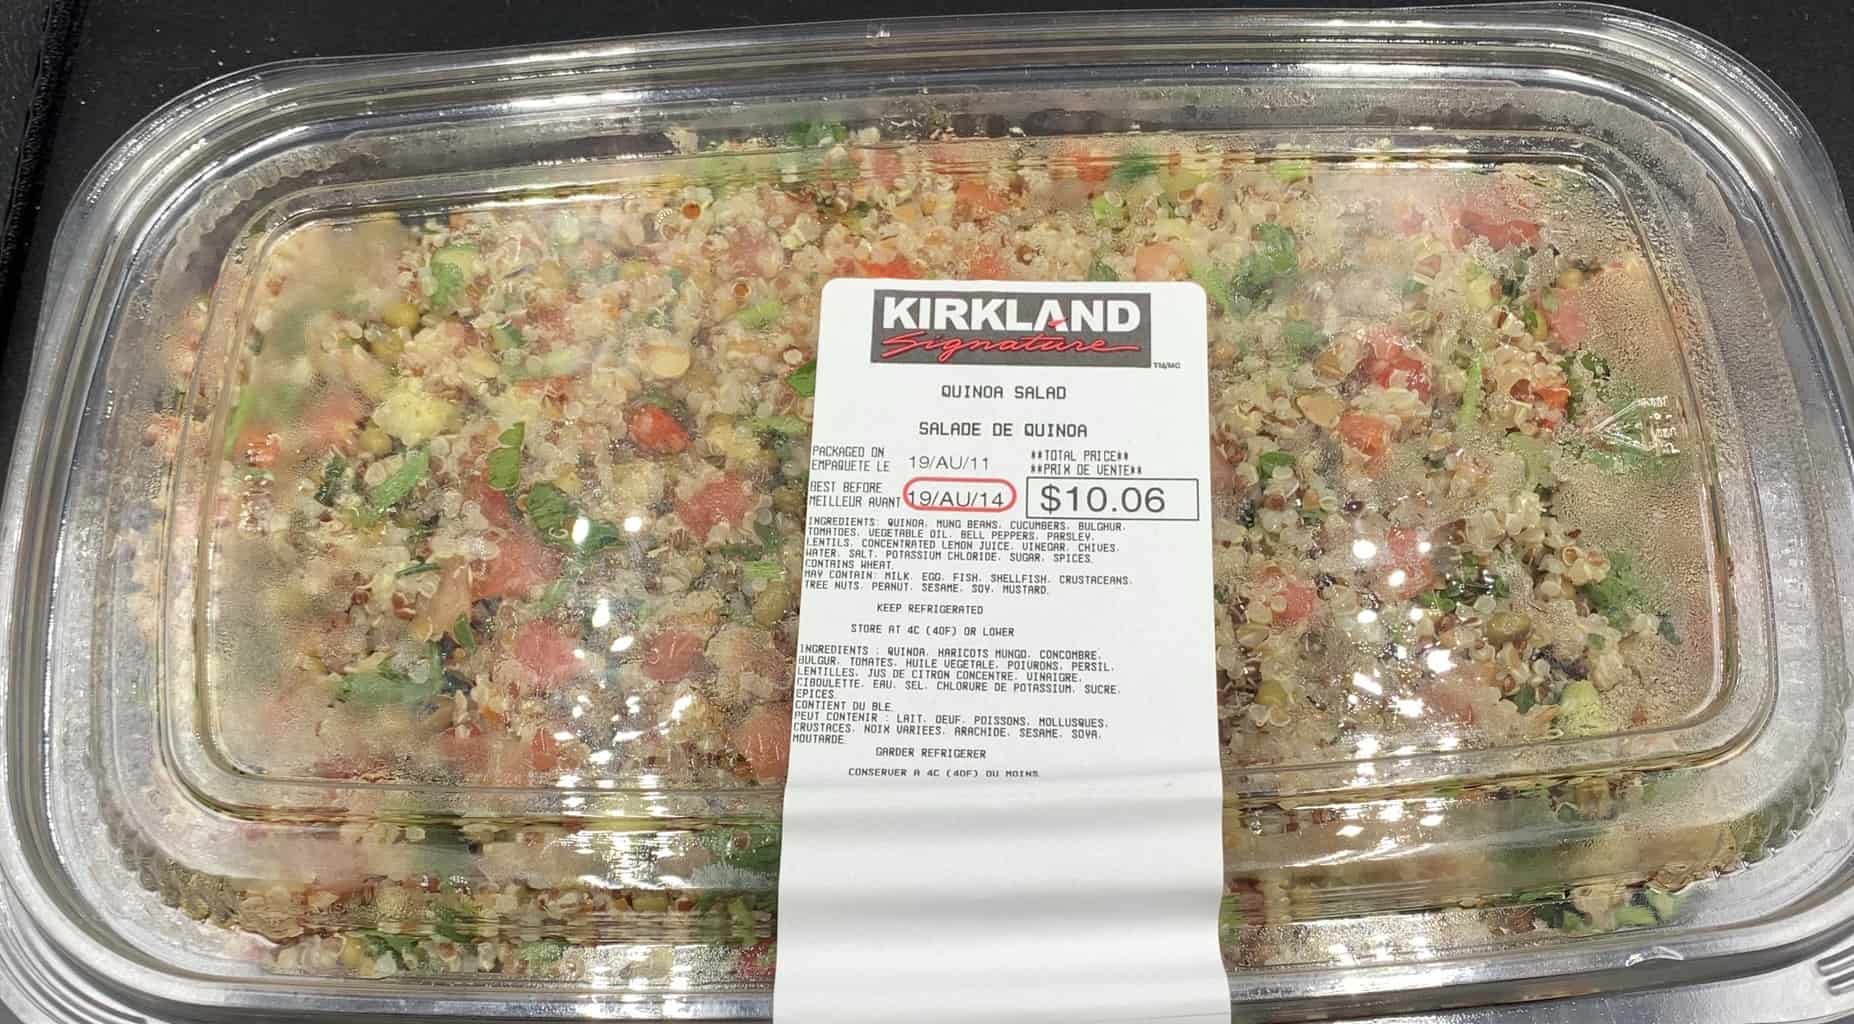 Costco Kirkland Quinoa Salad Review - Costcuisine.